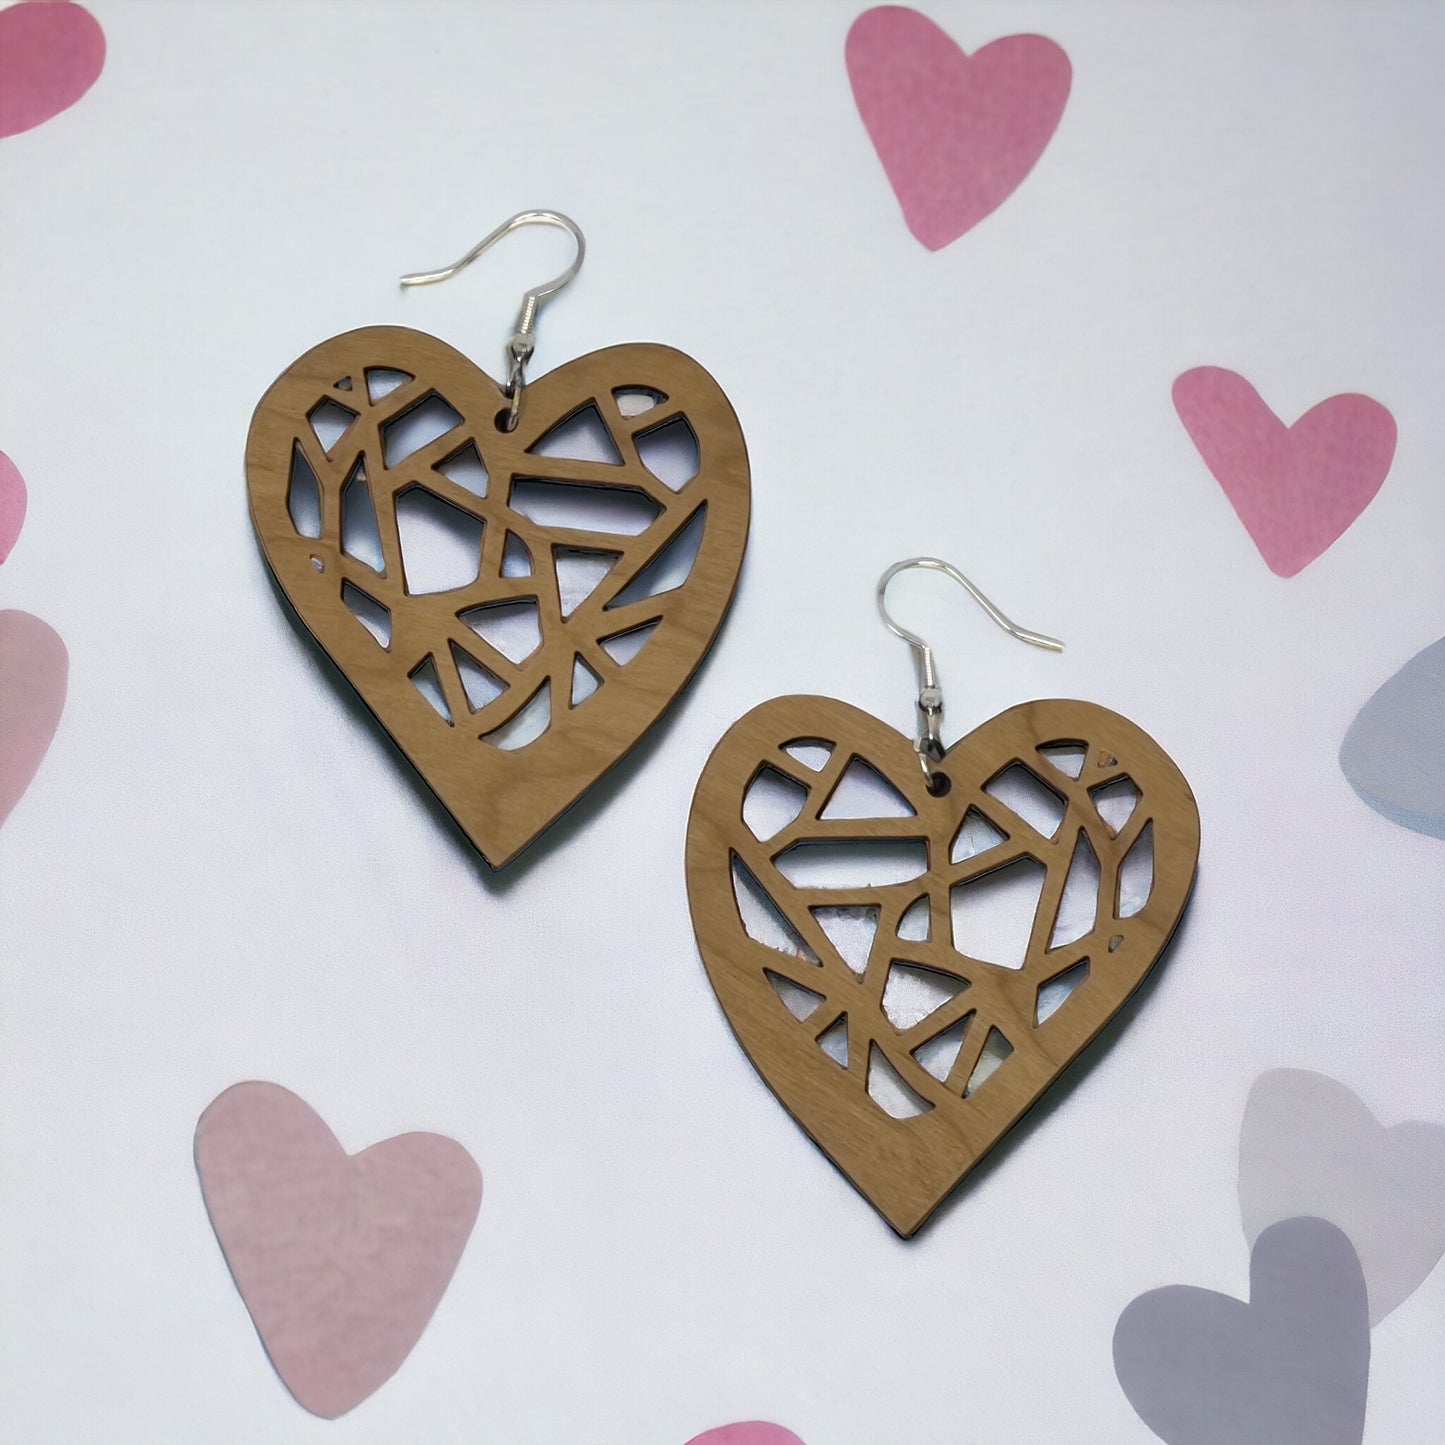 Wood Curved Heart Earrings, Rustic Valentines Dangle Earrings, Cute Holiday Earrings, Wooden Cutout Earrings, Country Western Boho Jewelry